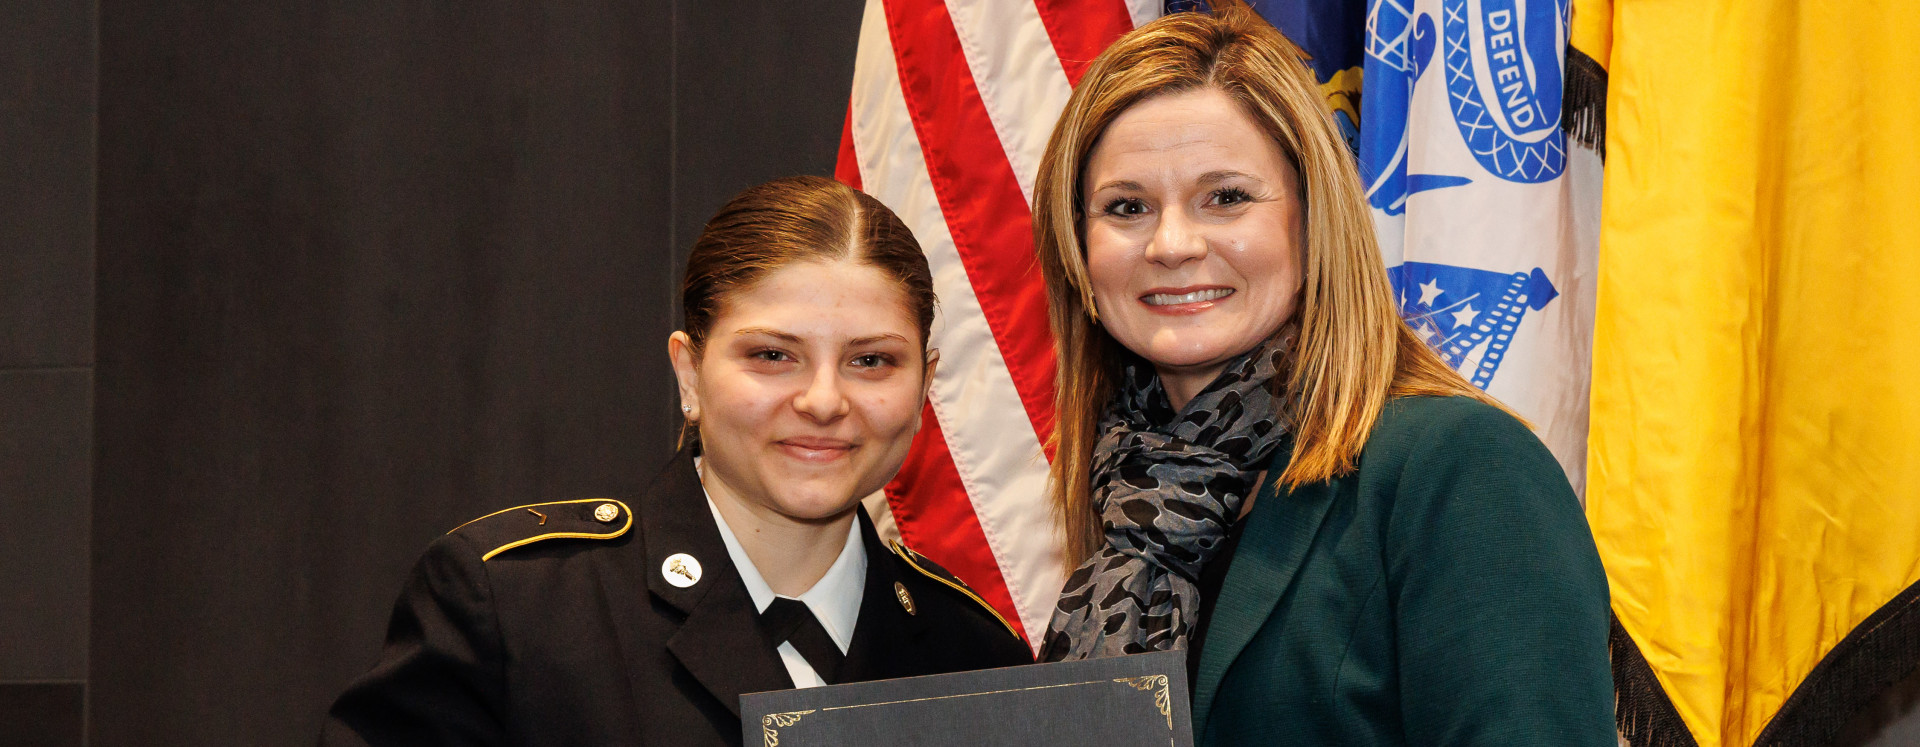 ROTC Cadet Receiving an Award